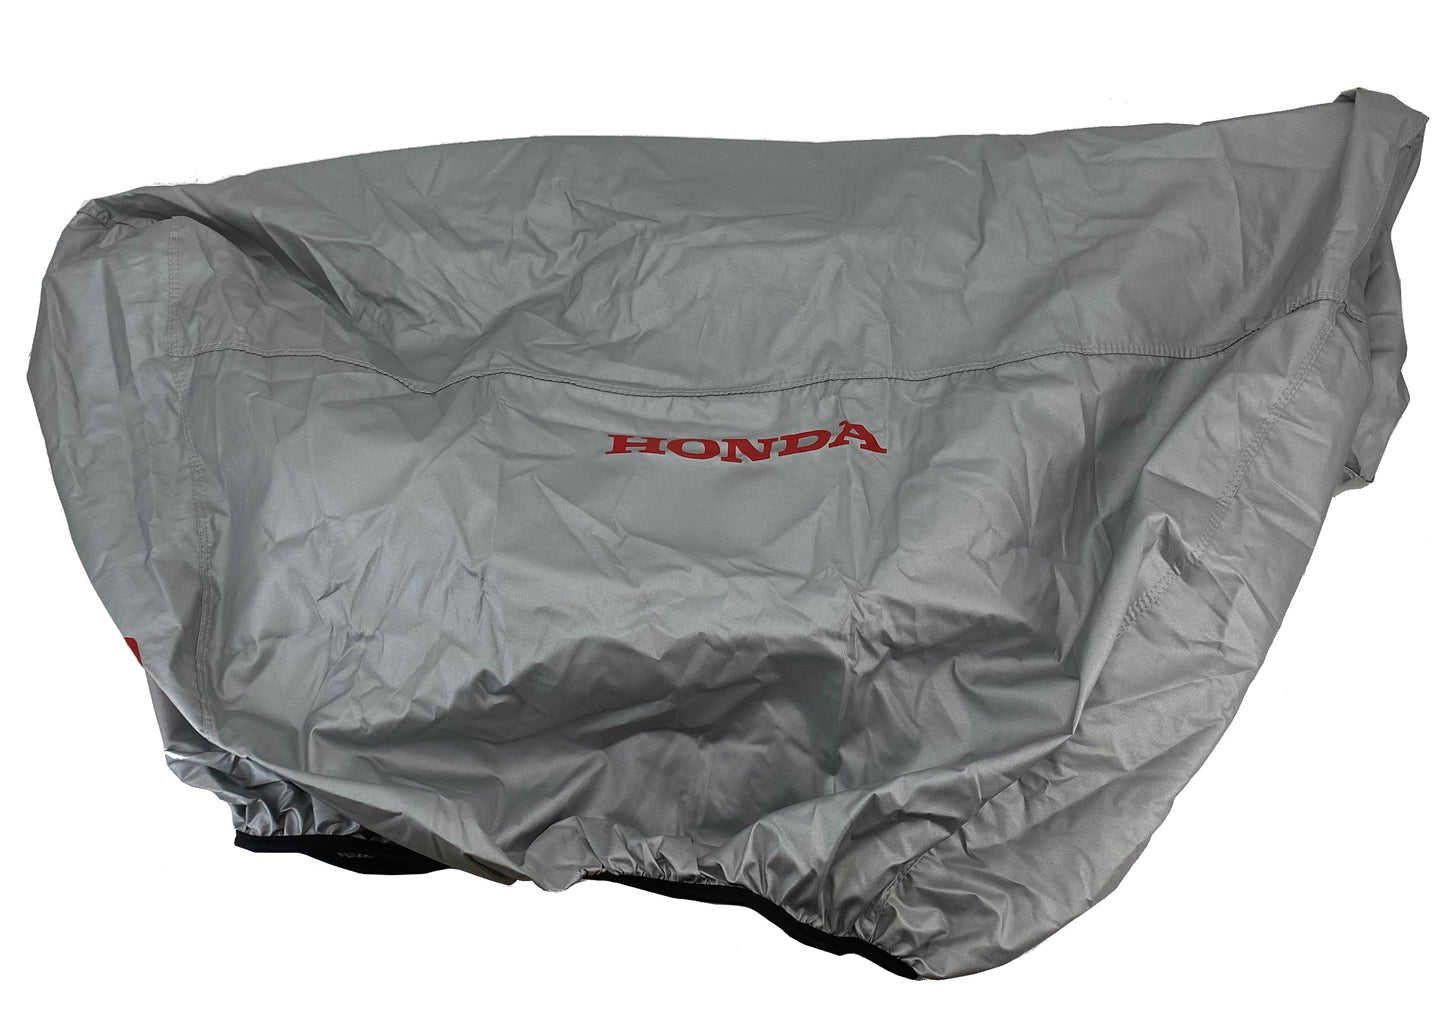 Honda Original Equipment HS520 Snow Blower Cover - 06520-768-000AH